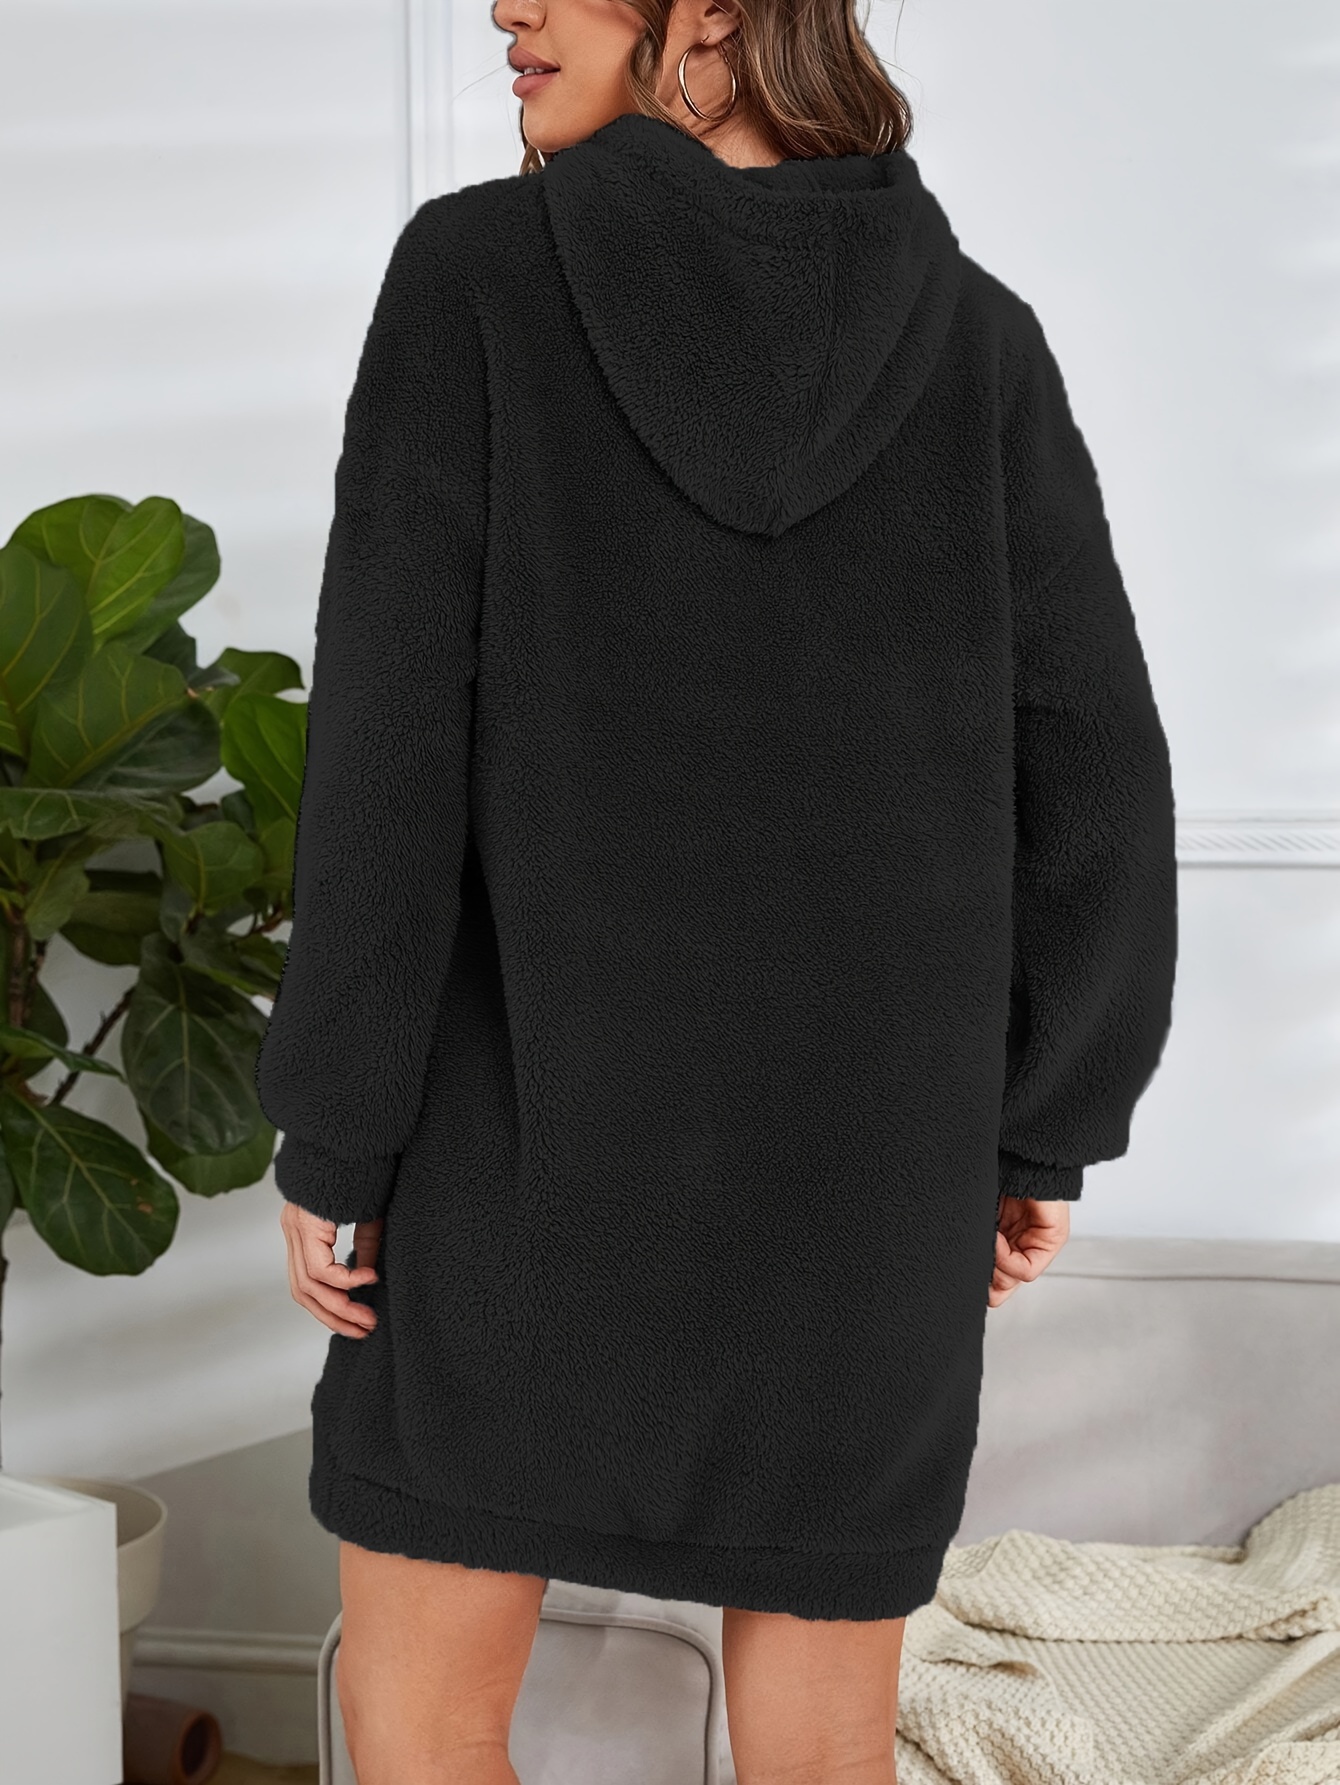 hooded teddy dress, hooded teddy dress casual long sleeve simple warm dress womens clothing details 44